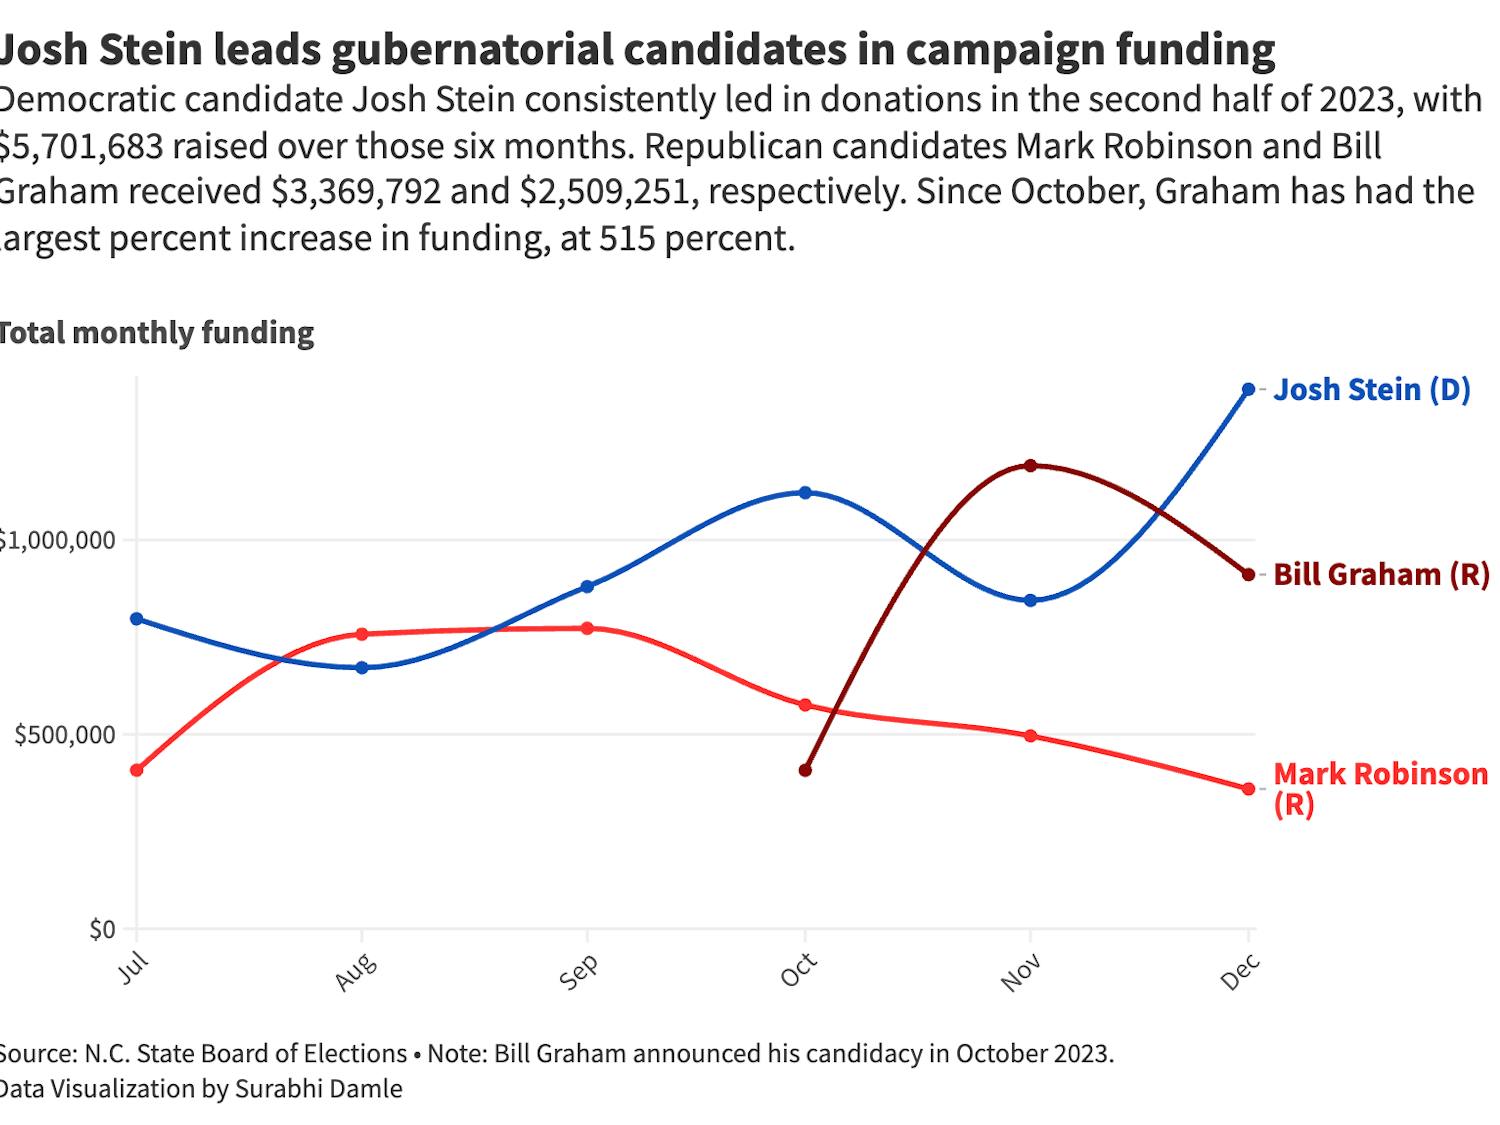 Visualization: Josh Stein leads gubernatorial candidates in campaign funding